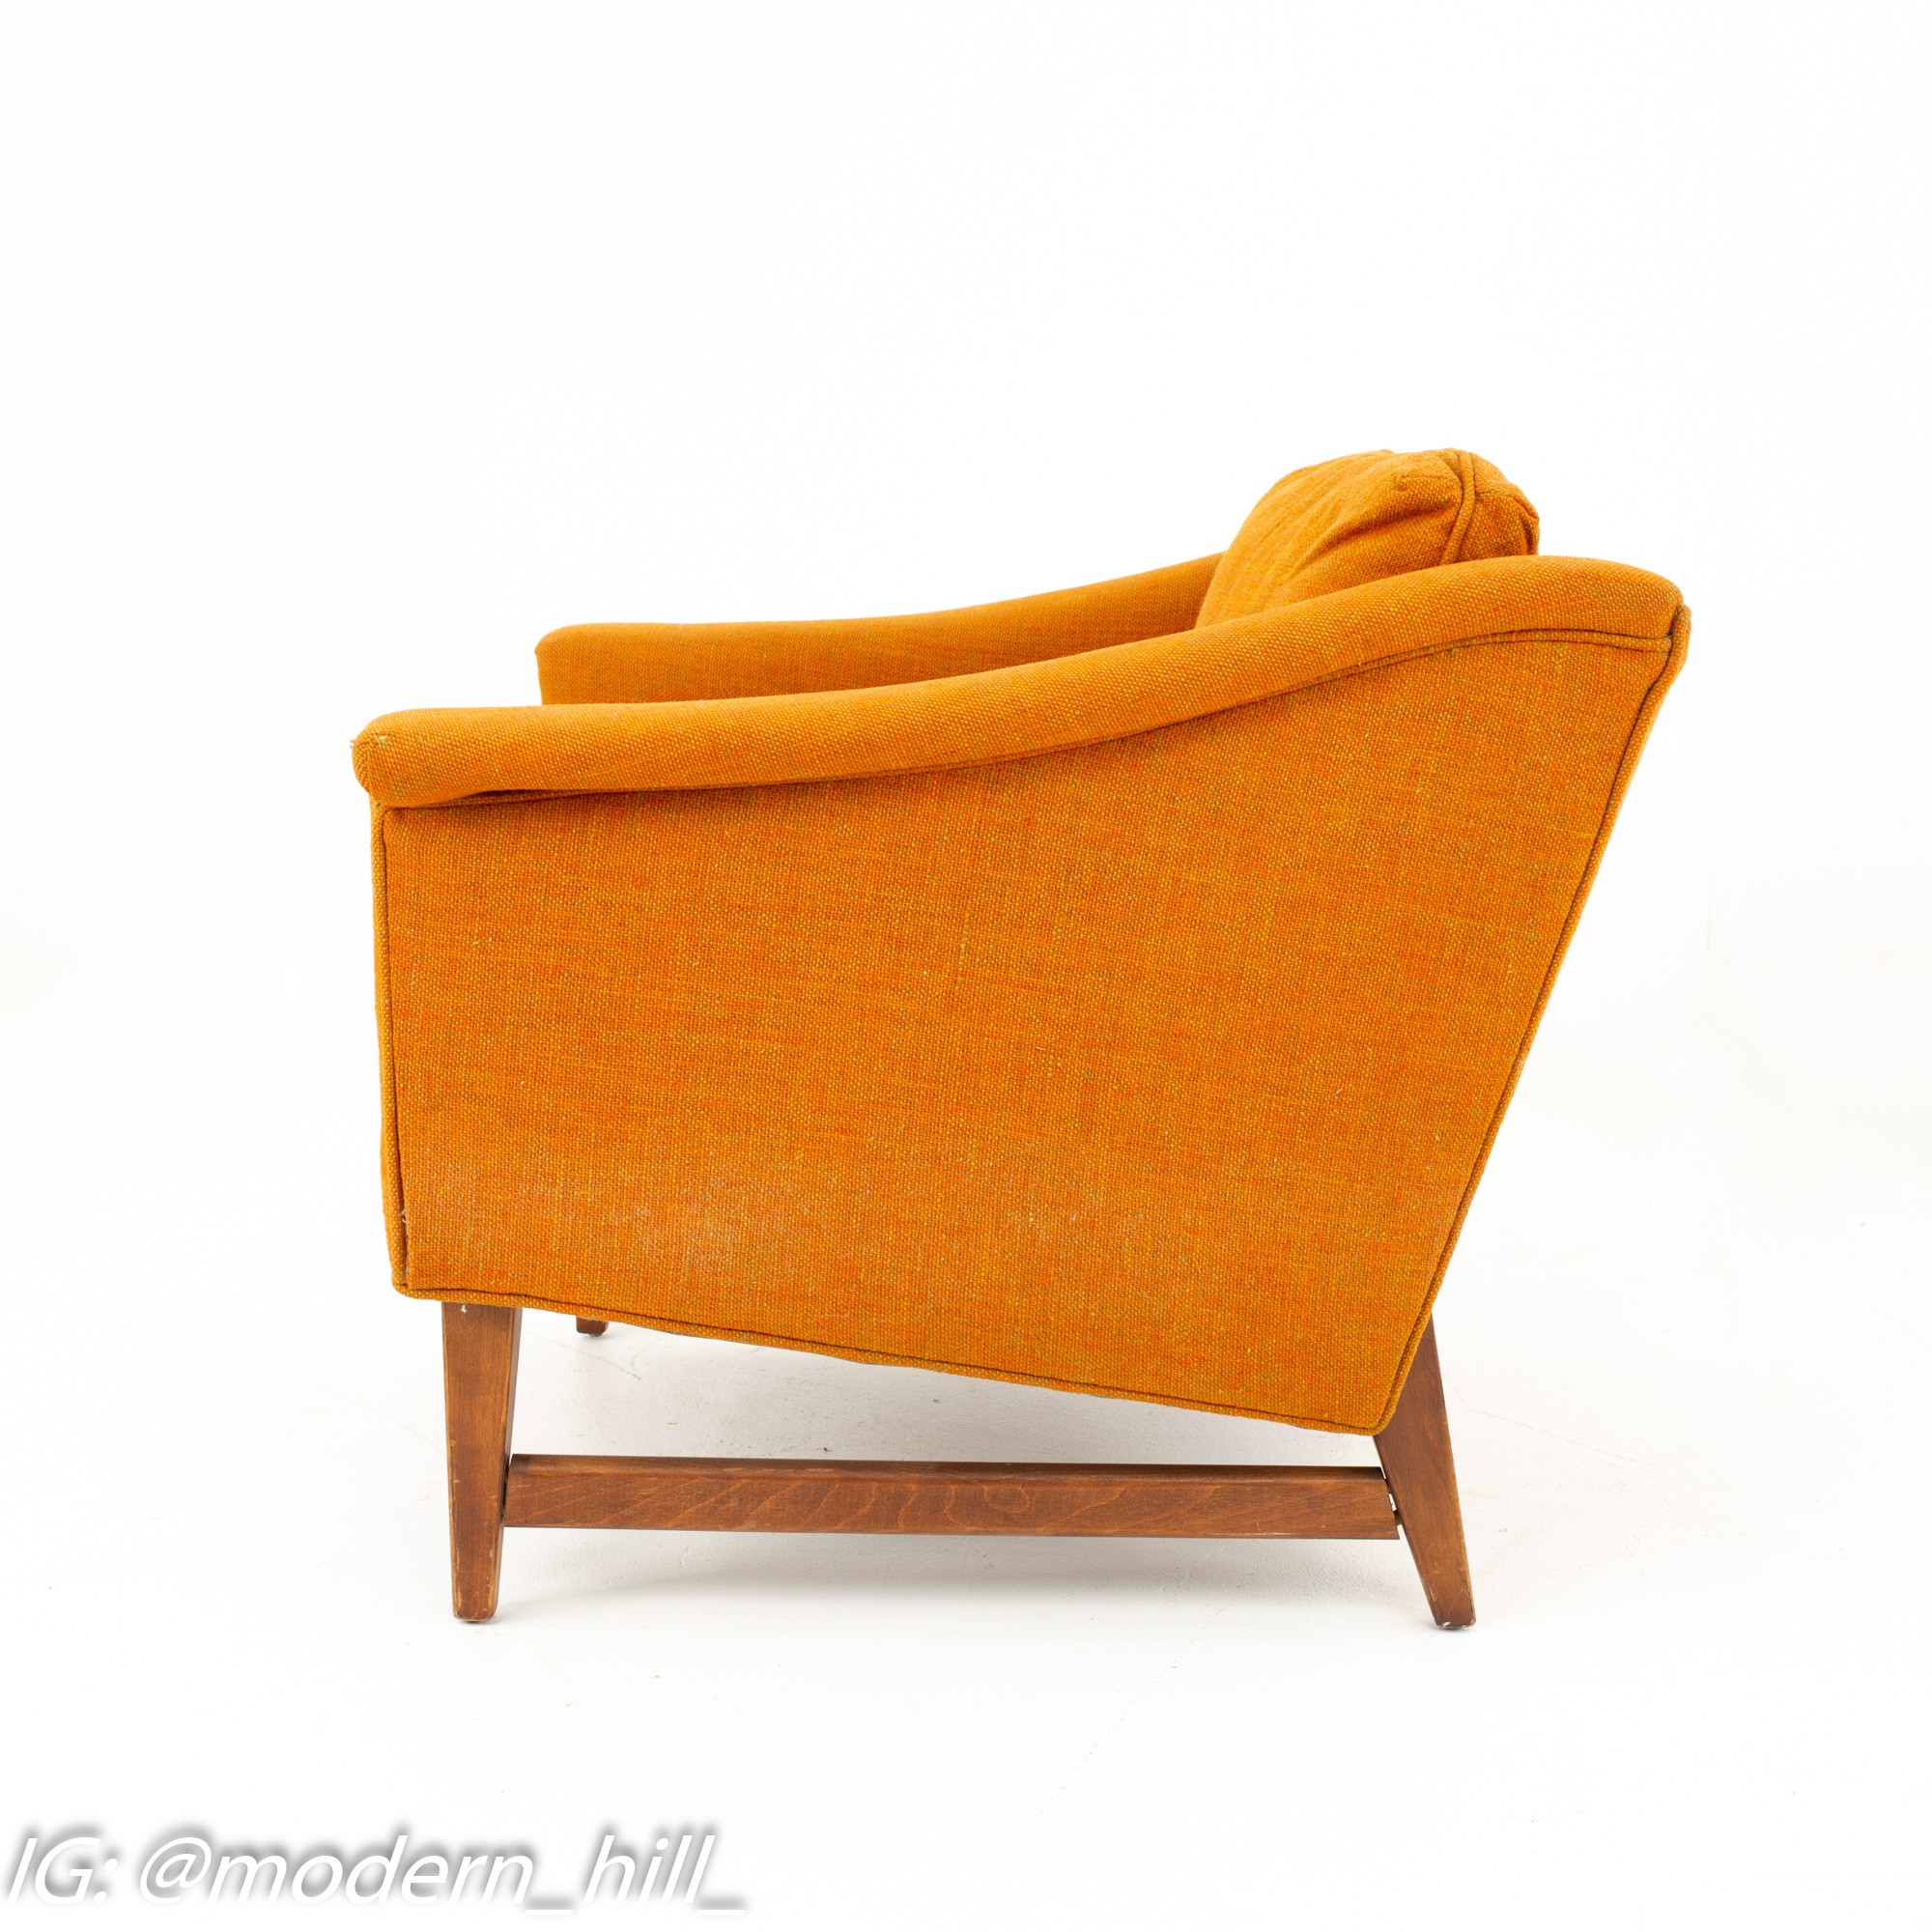 Selig Signature Mid Century Walnut Orange Upholstered Lounge Chair